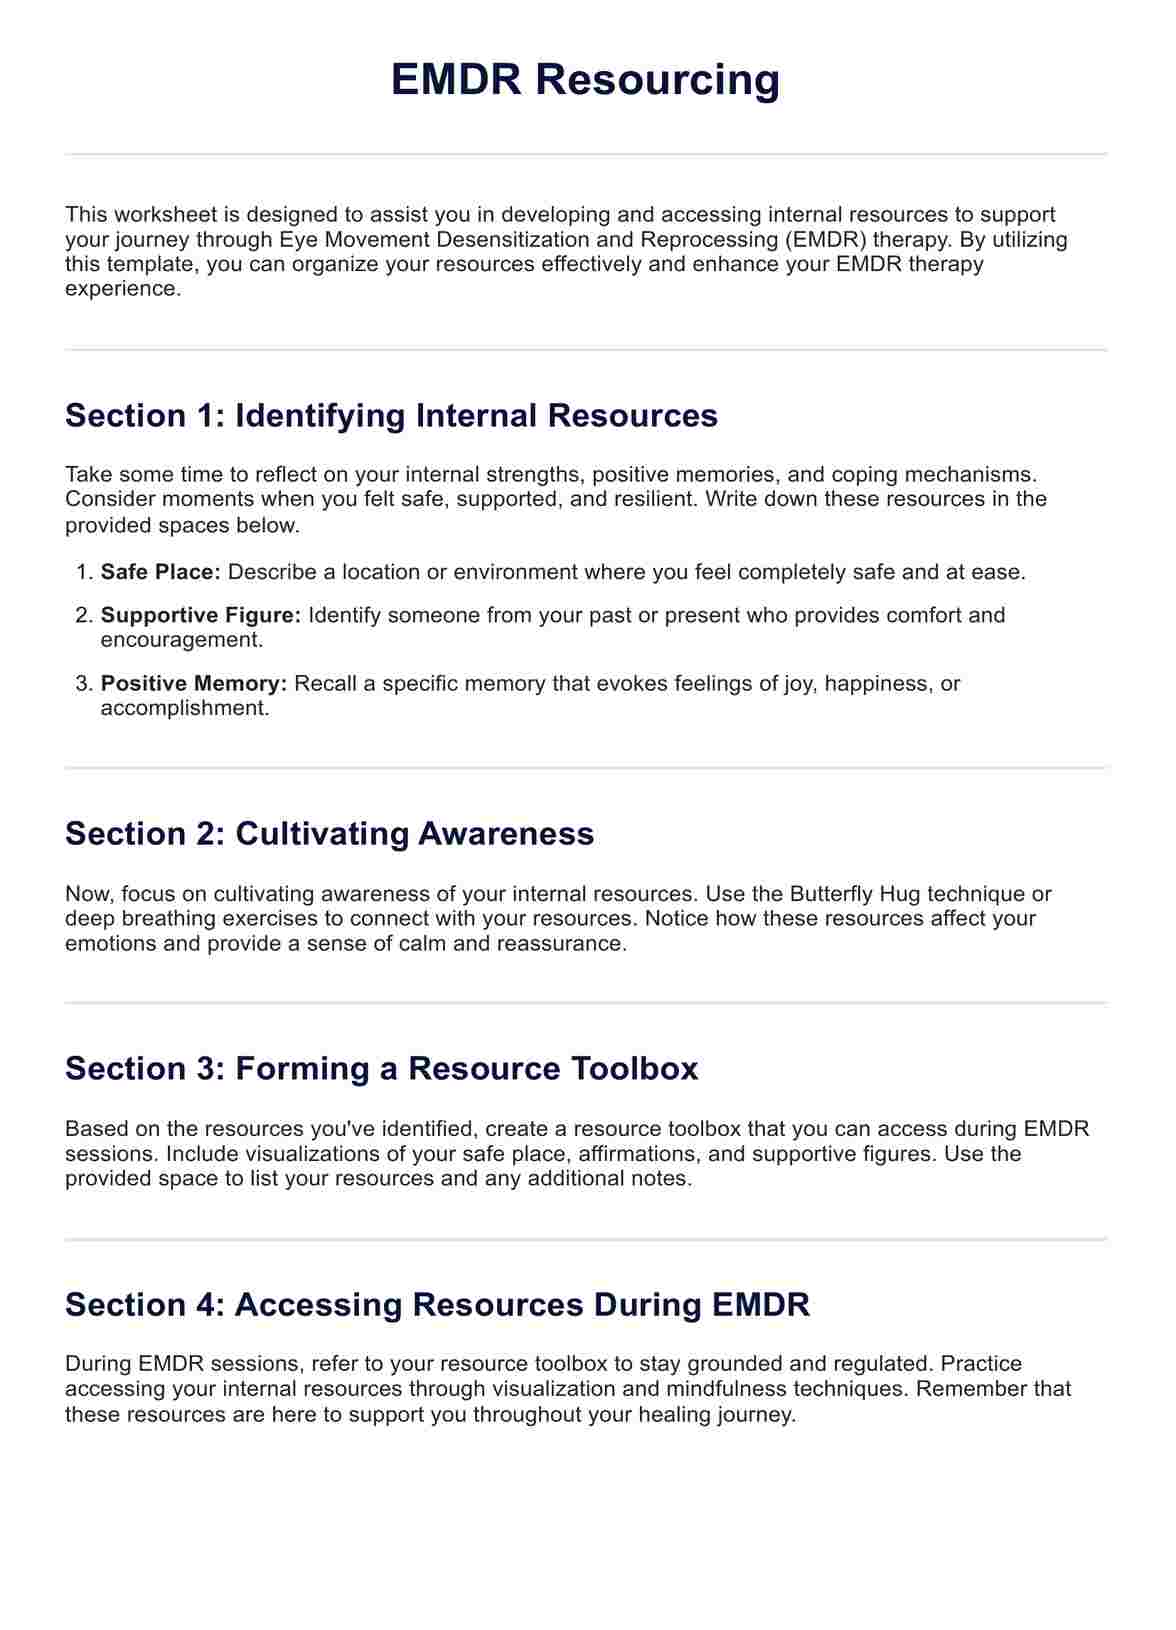 EMDR Resourcing PDF PDF Example